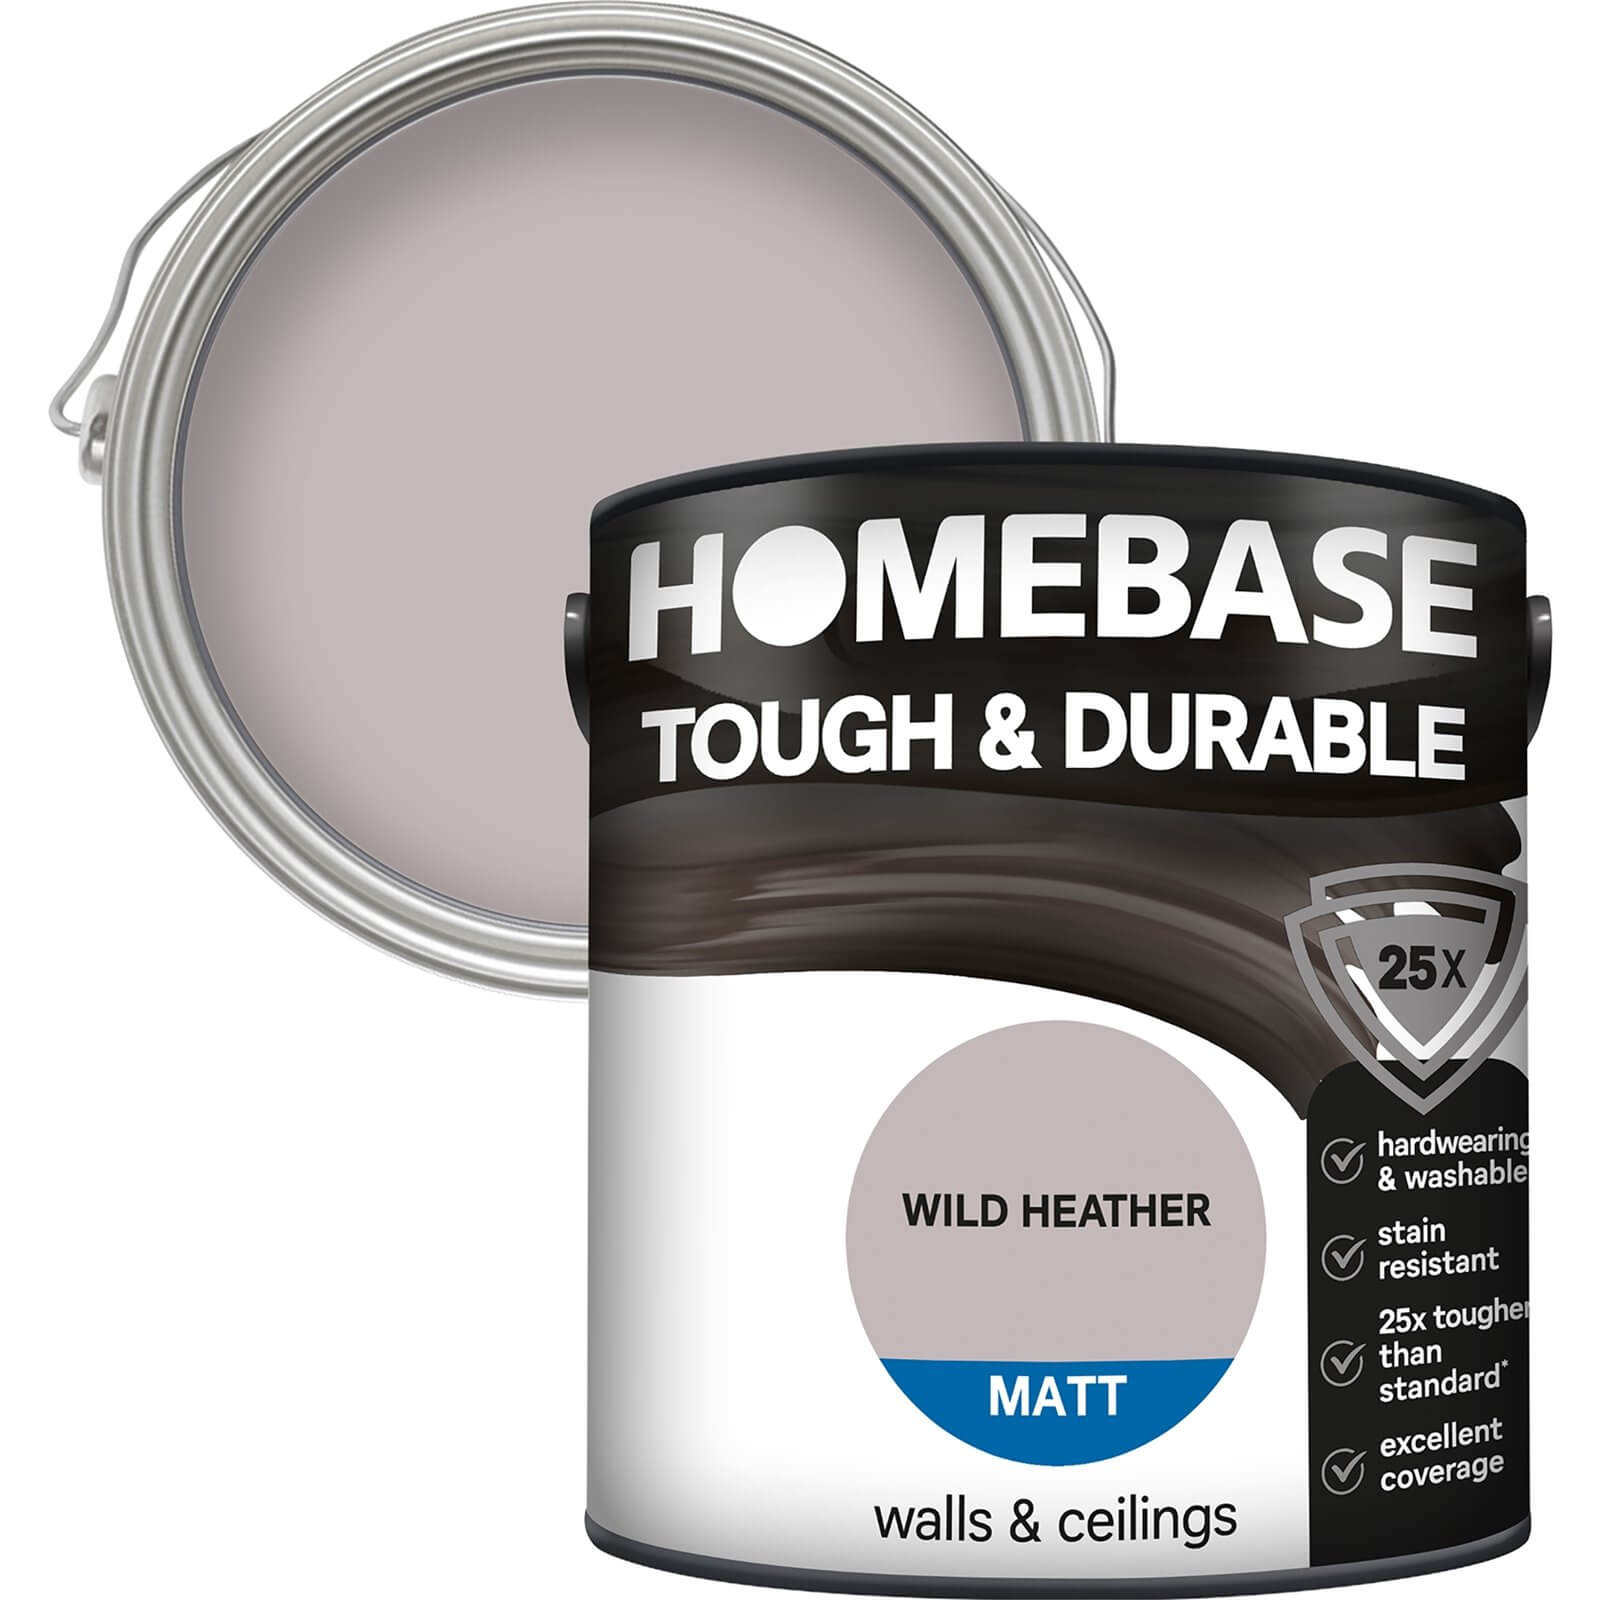 Homebase Tough & Durable Matt Paint Wild Heather - 2.5L